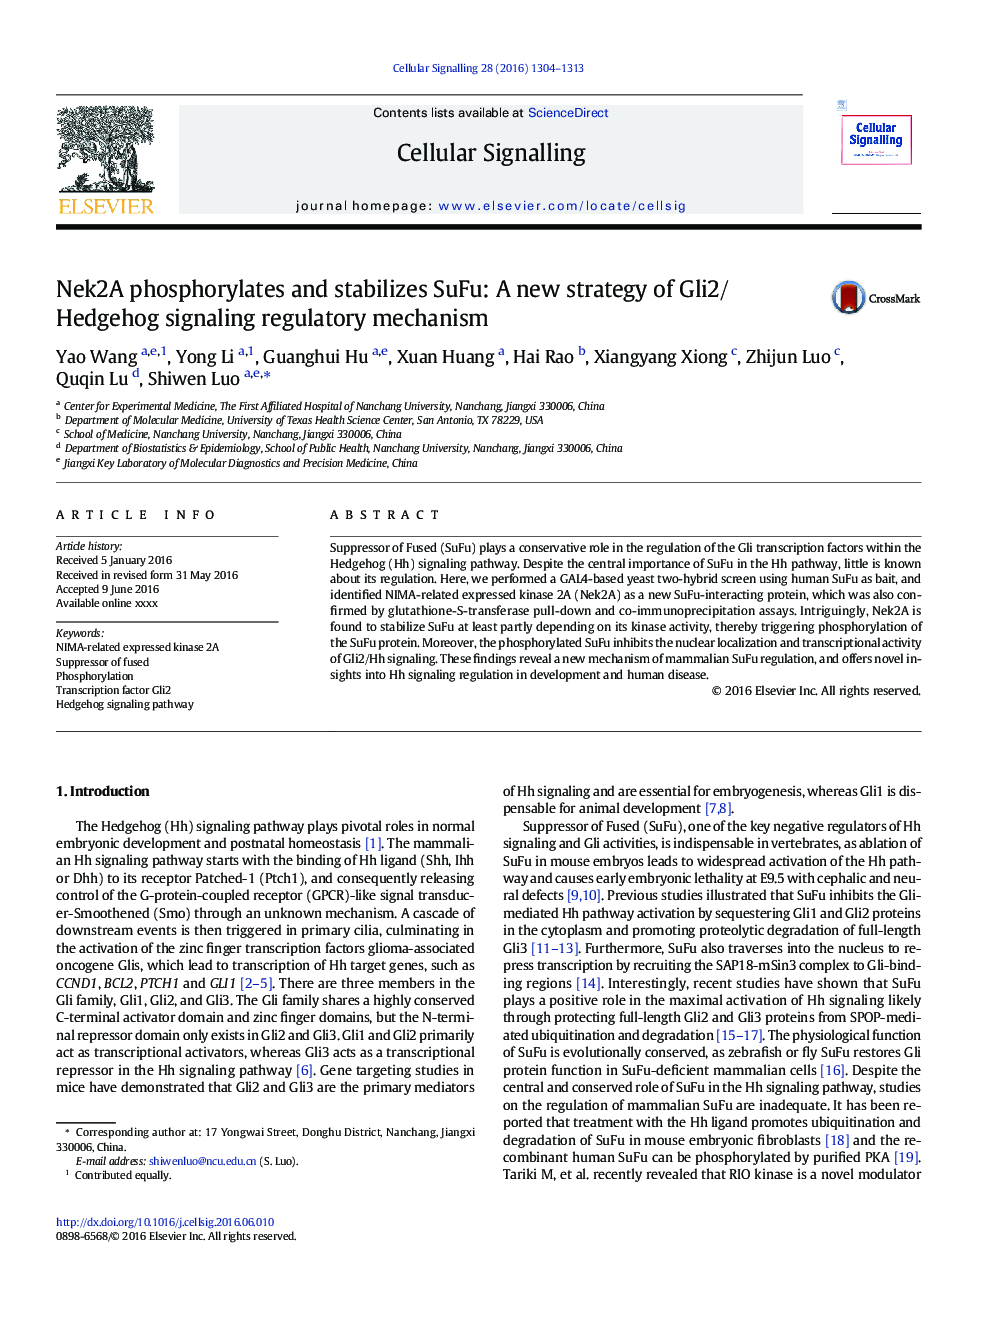 Nek2A phosphorylates and stabilizes SuFu: A new strategy of Gli2/Hedgehog signaling regulatory mechanism